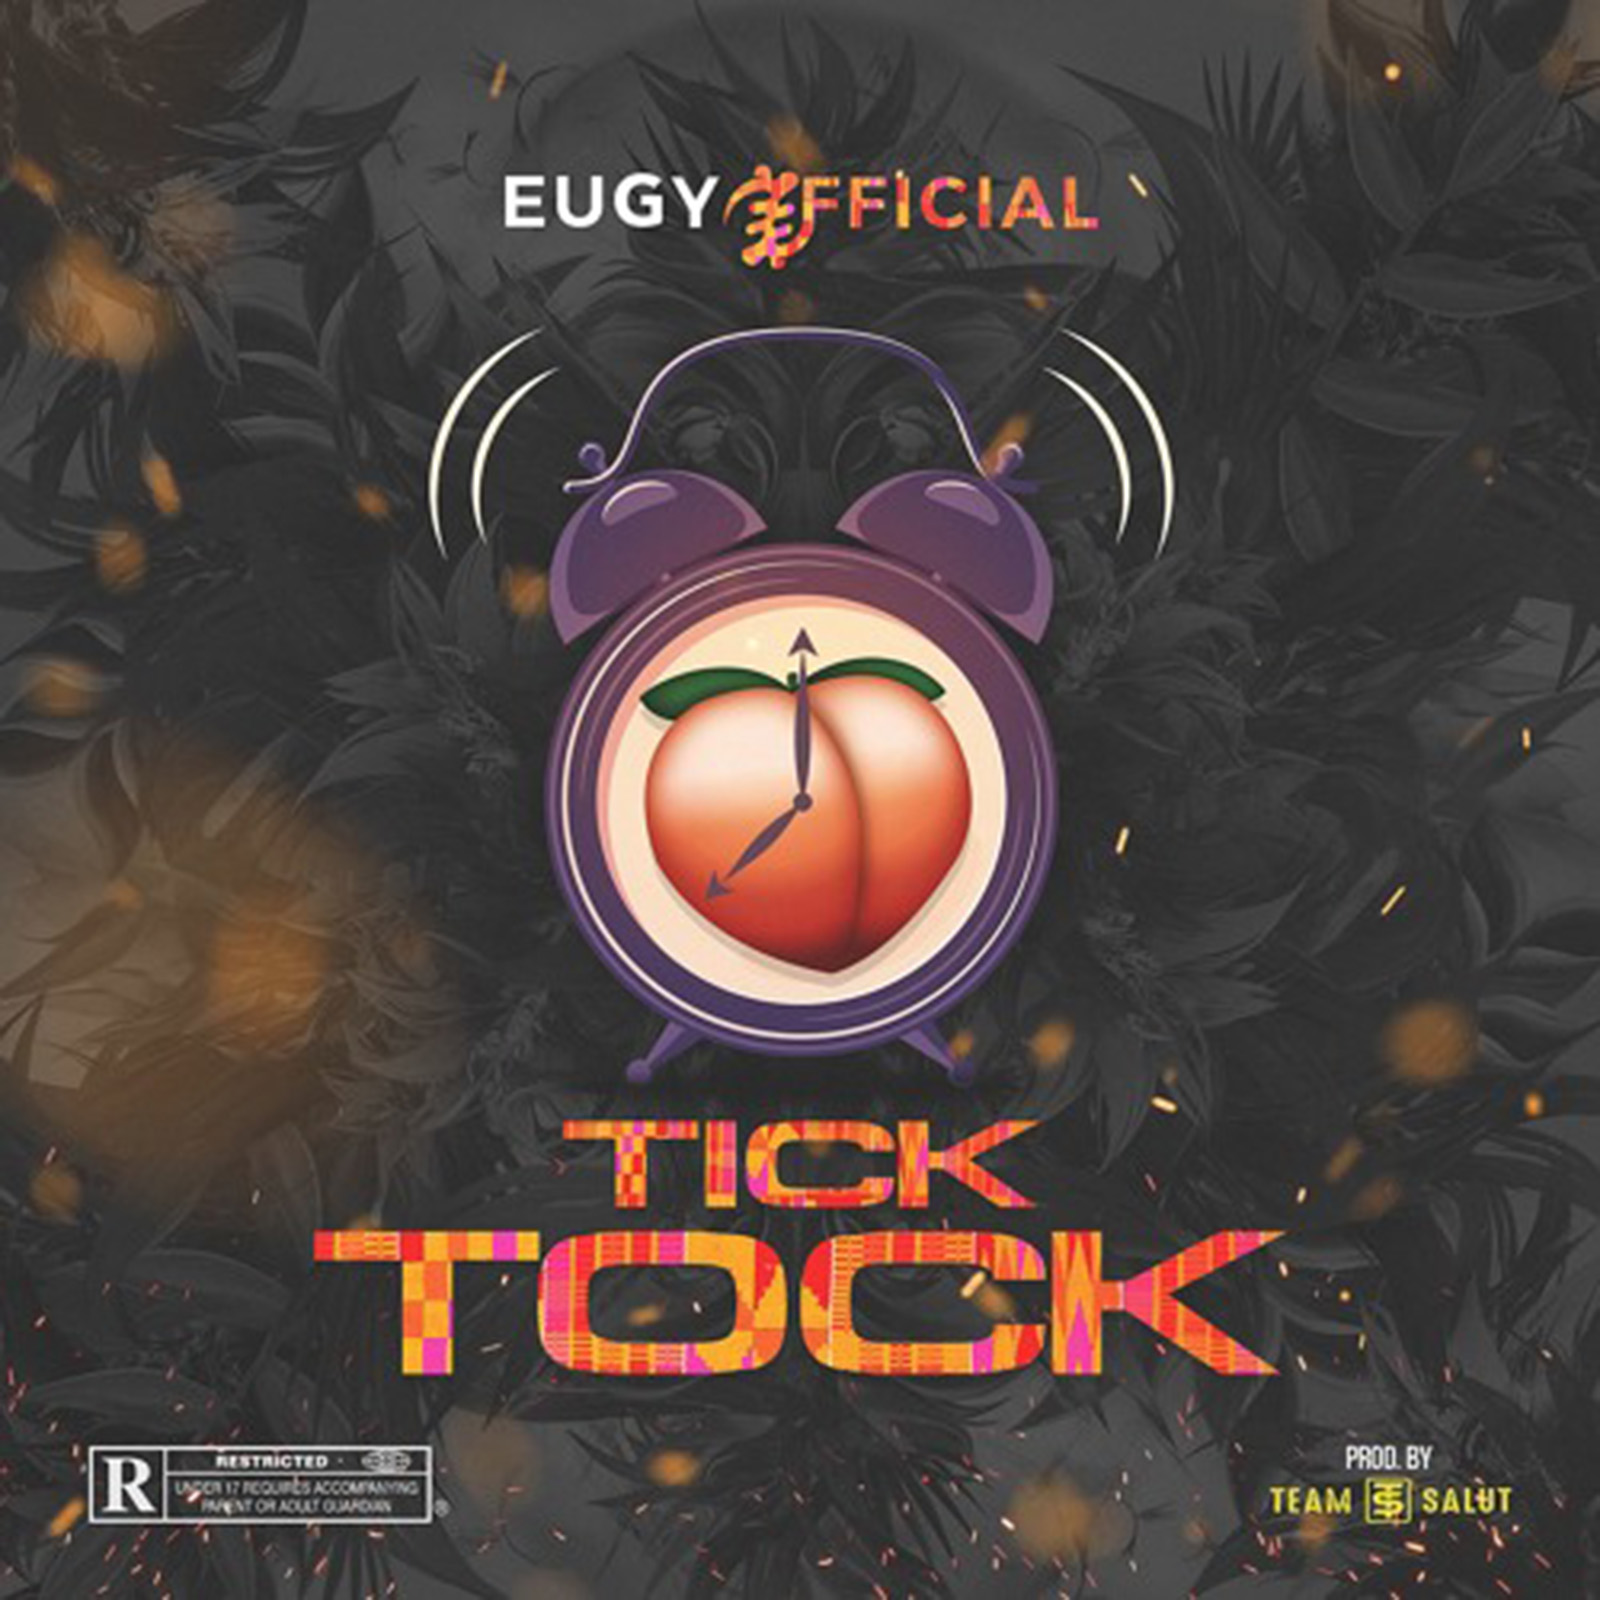 Tick Tock by Eugy